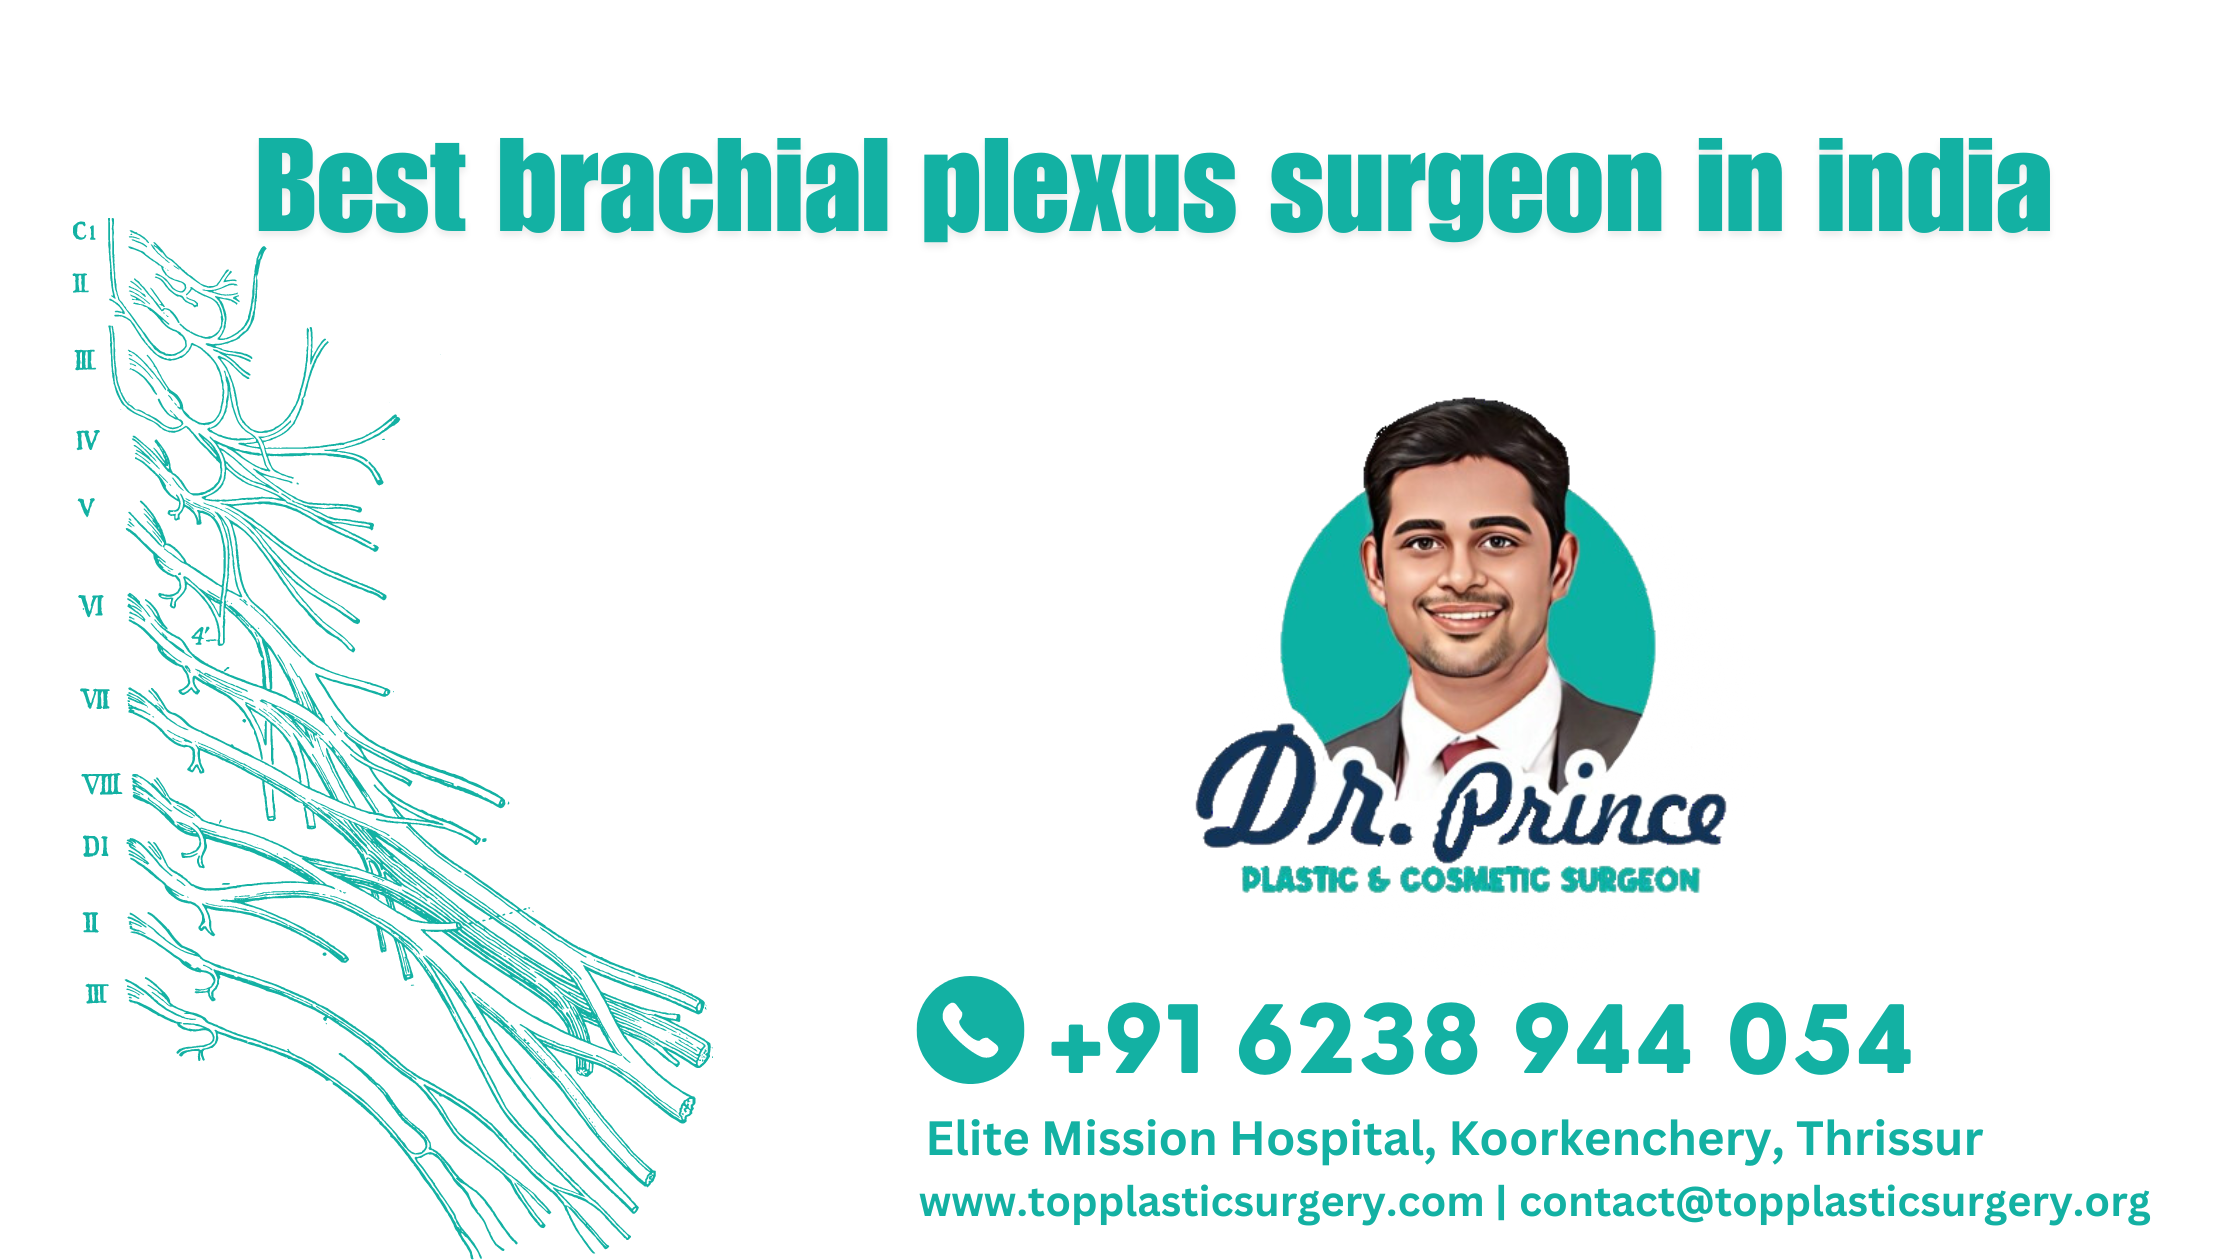 Renowned Brachial Plexus Surgeon in India Performing Surgery